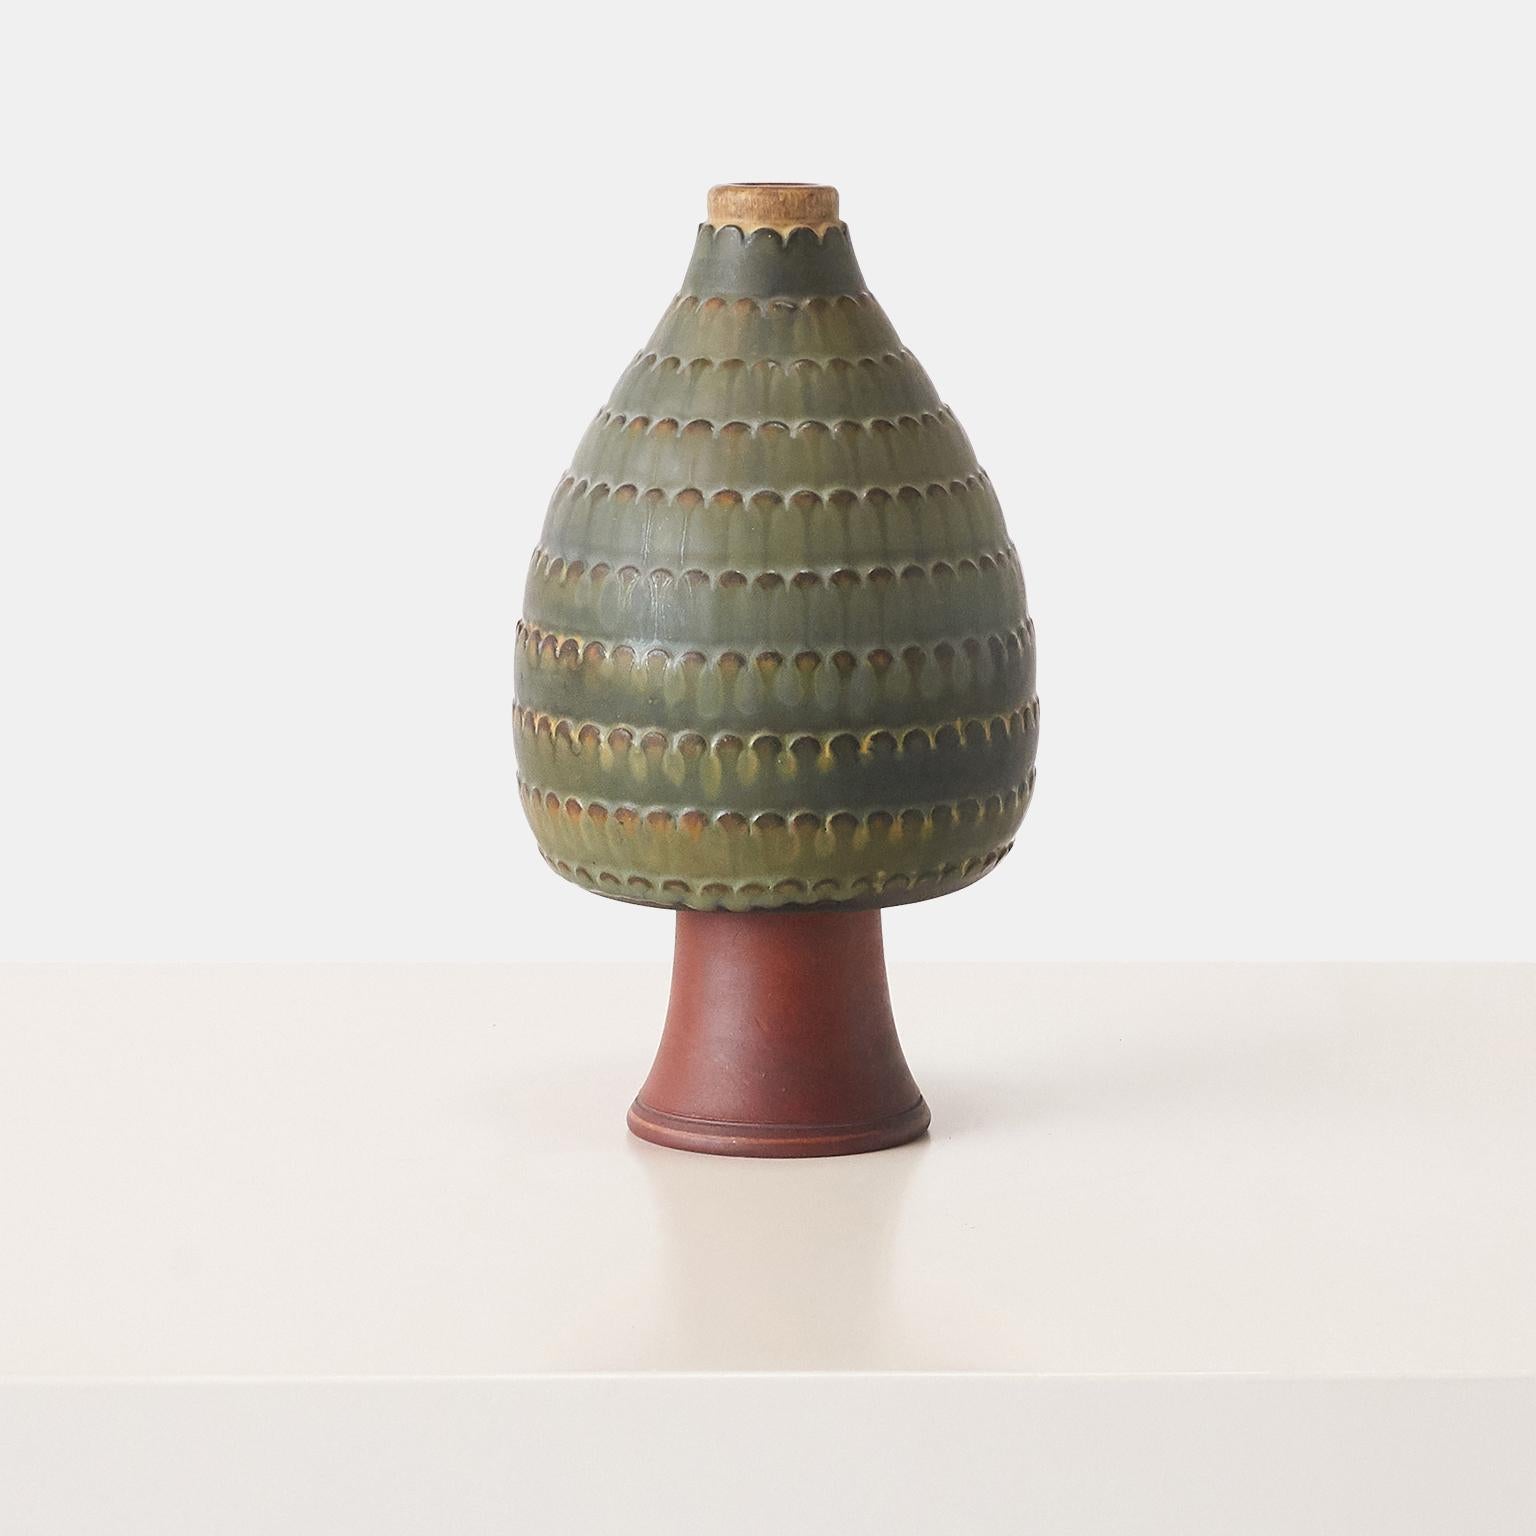 A glazed stoneware vase, incised signature and studio mark to underside: [Farsta Kage Studio]